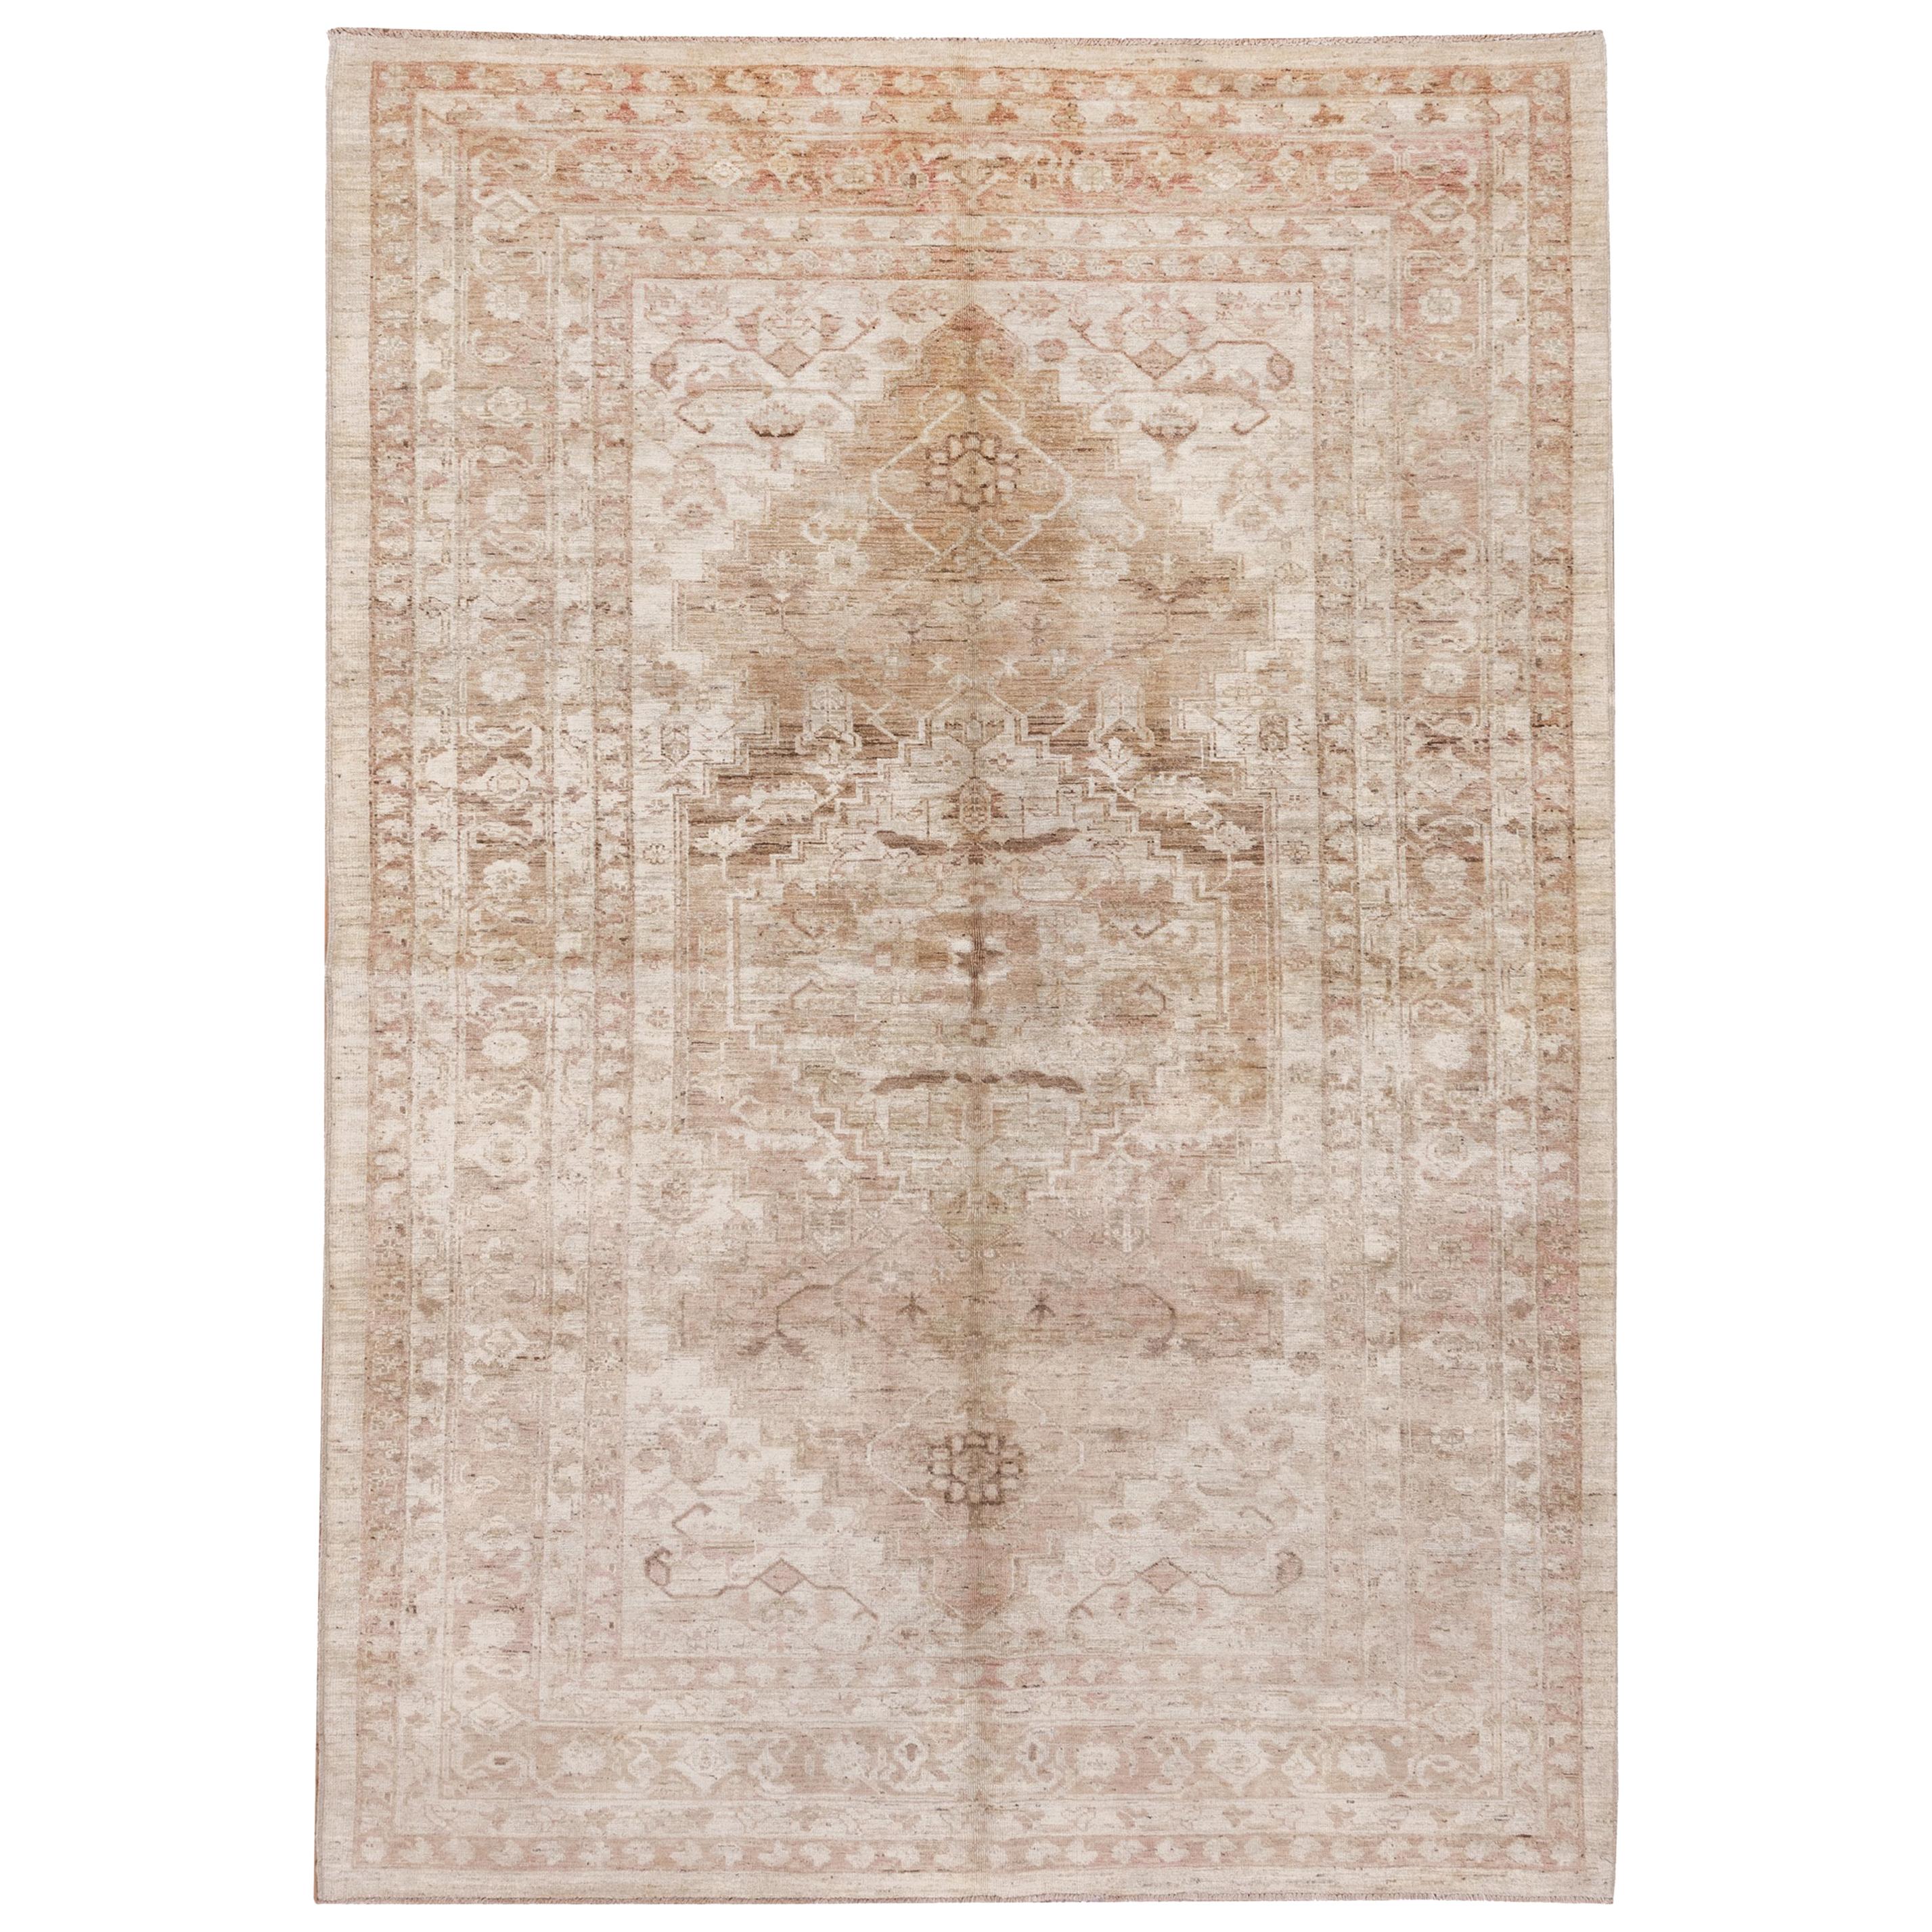 Neutral Persian Heriz Carpet